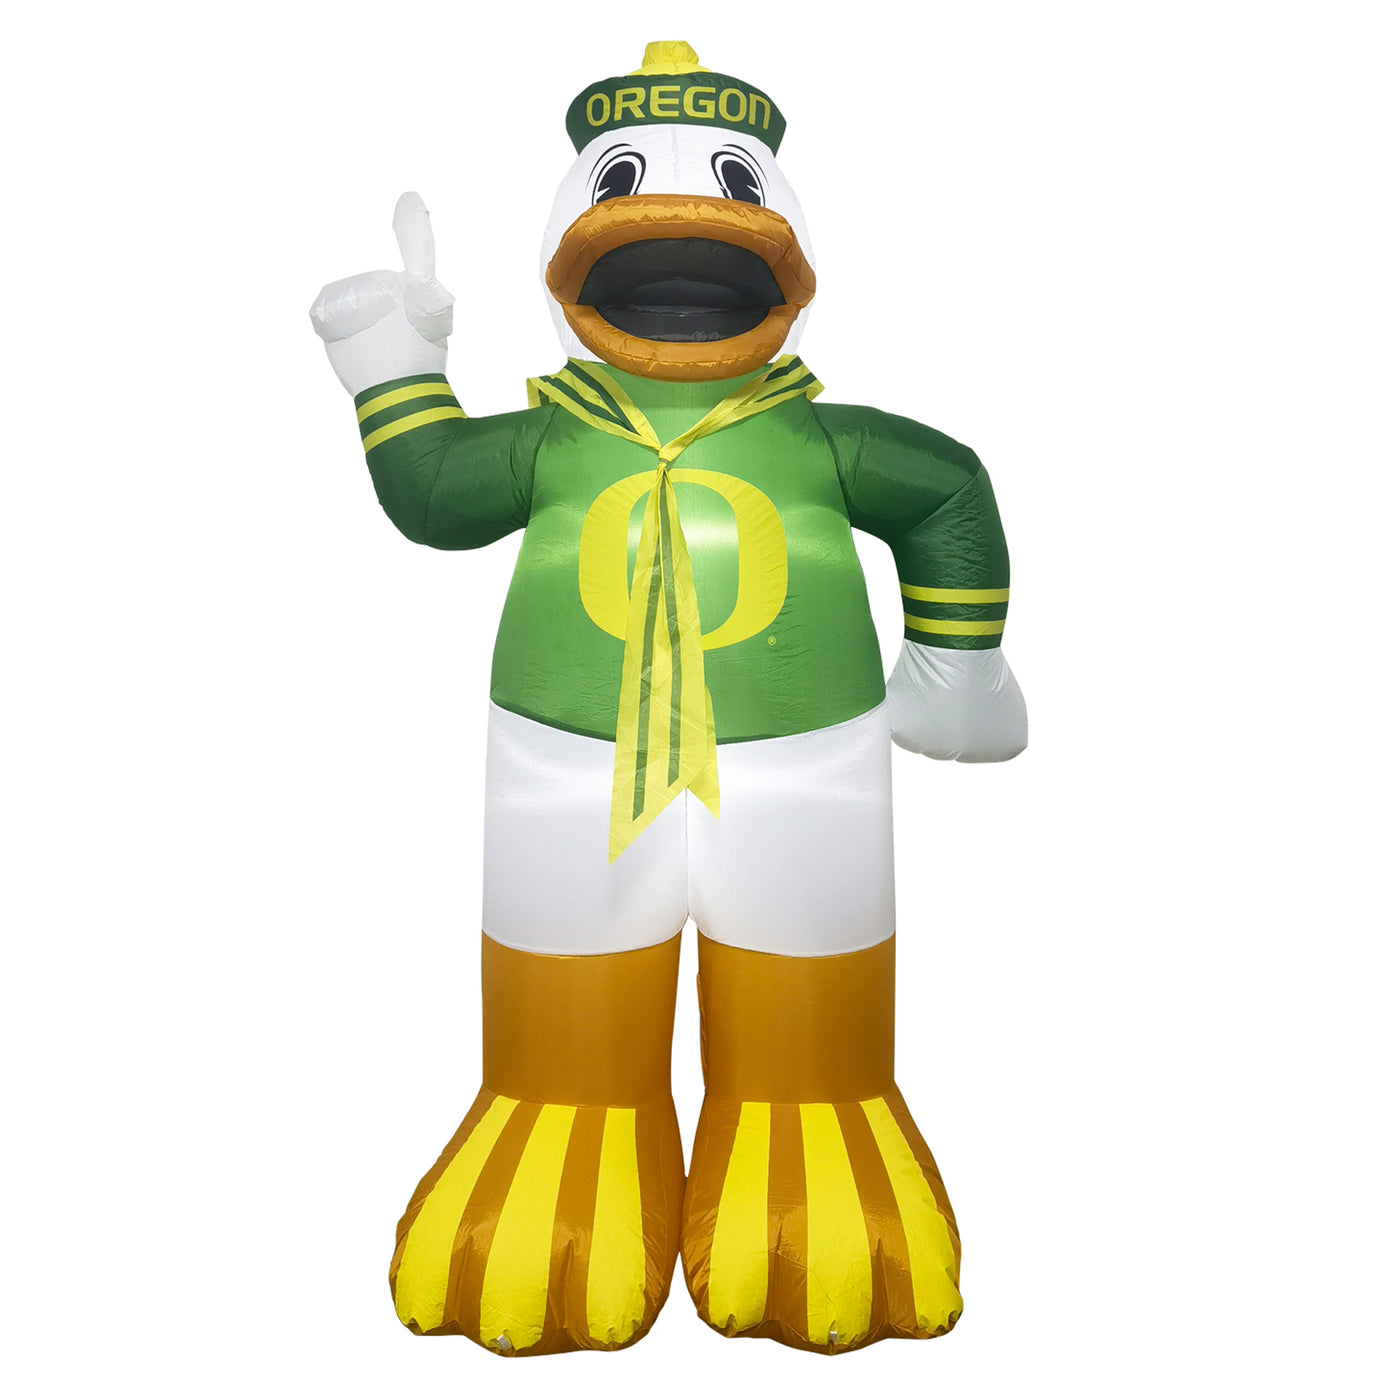 Oregon Inflatable Mascot